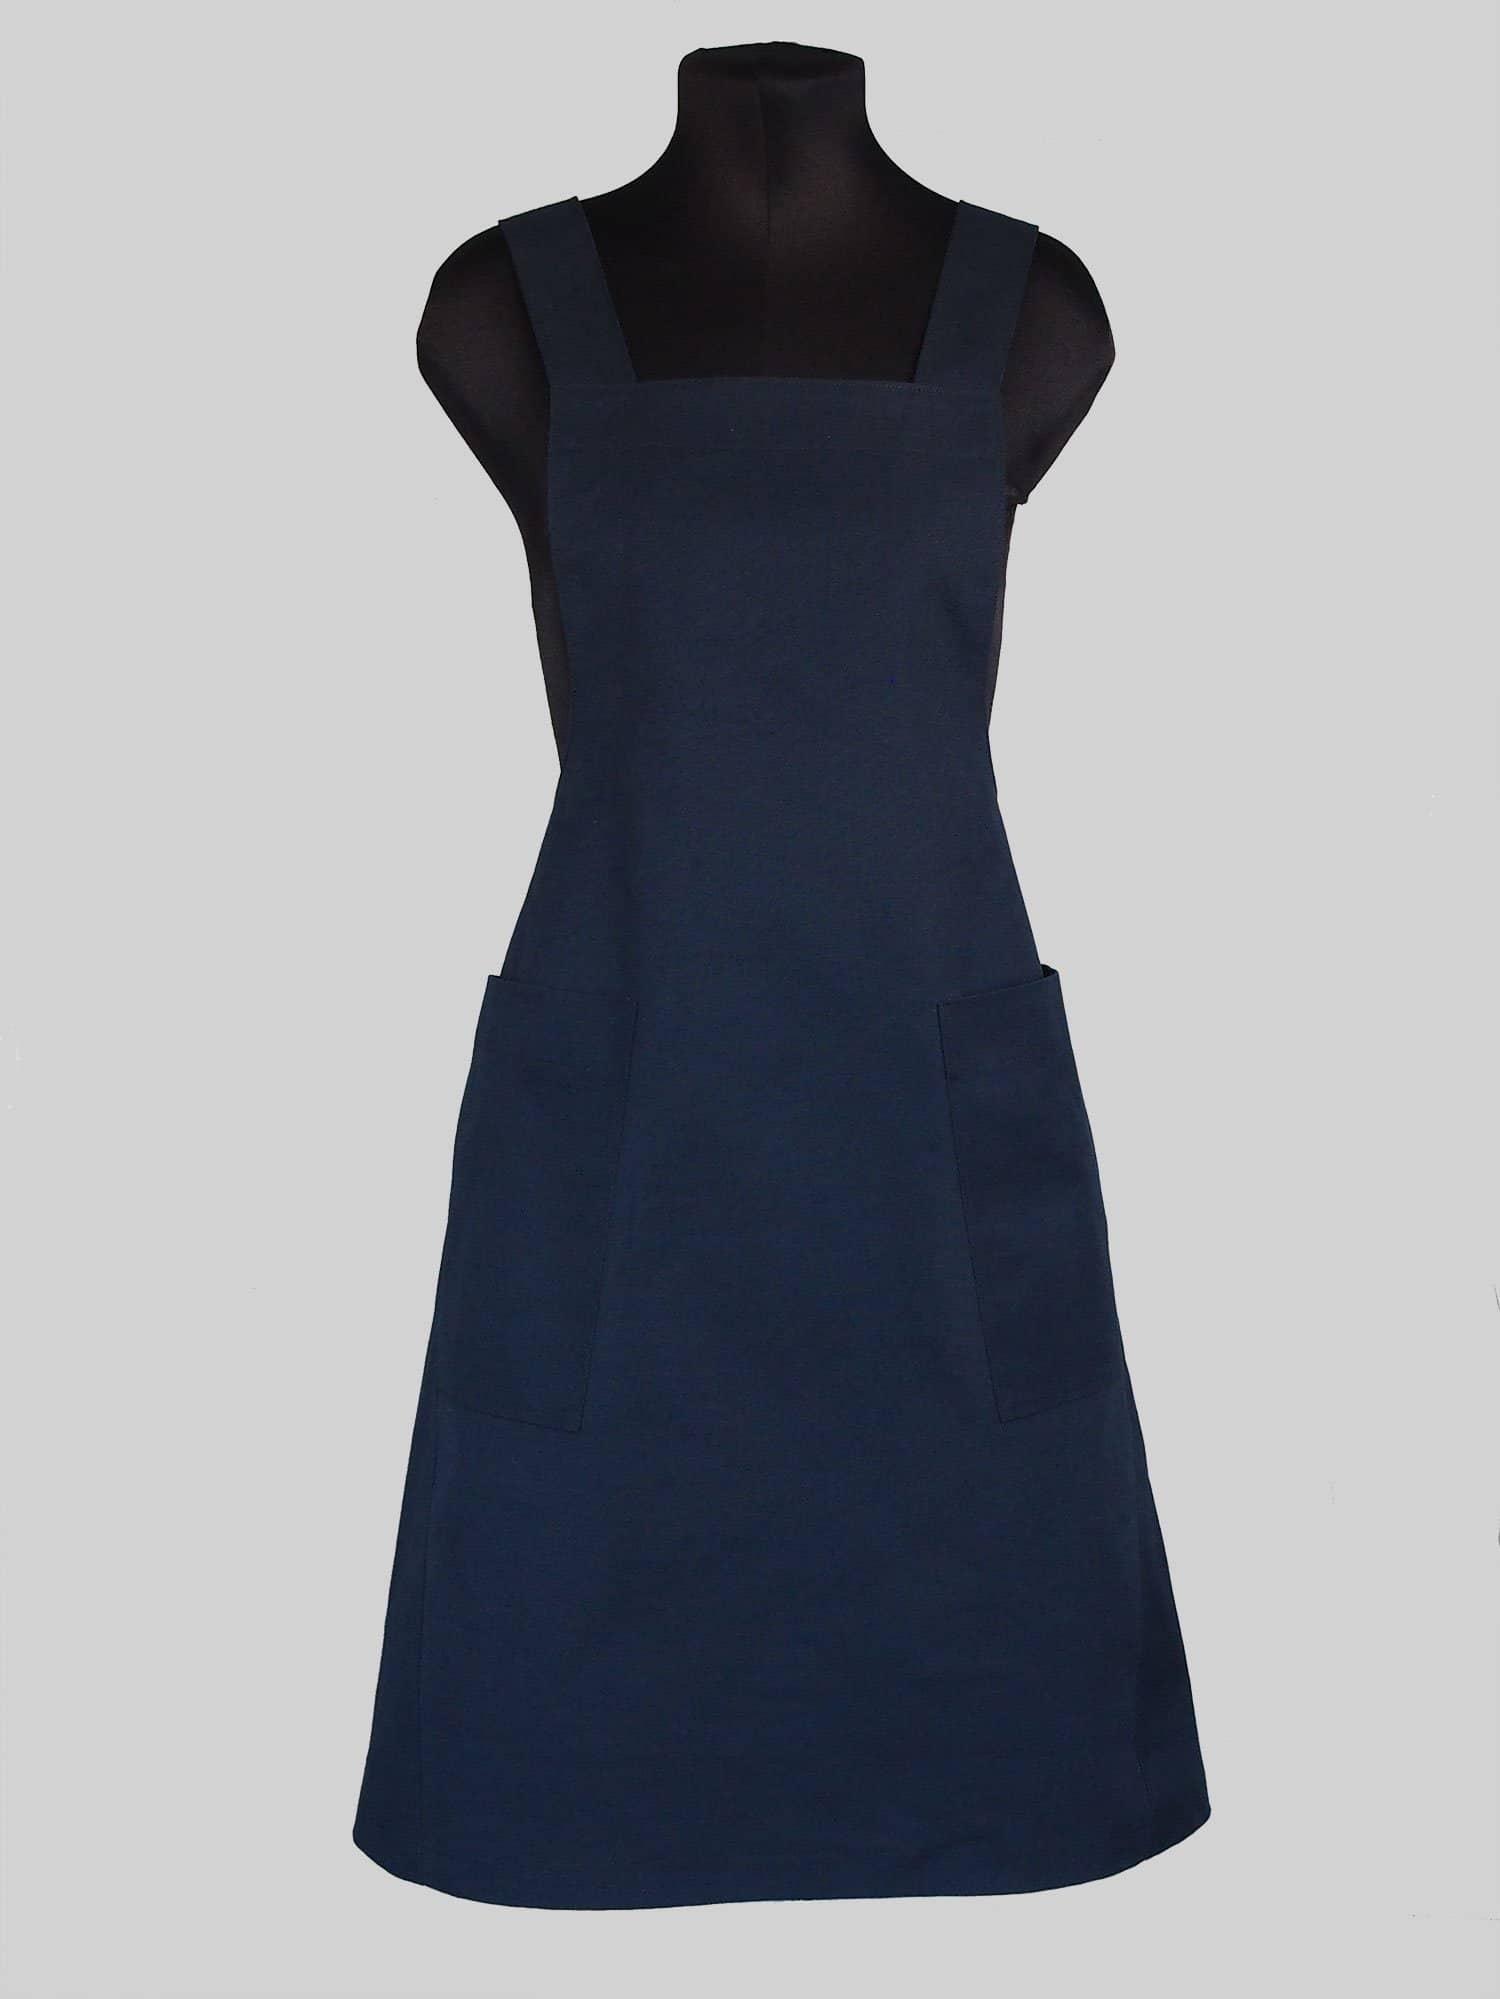 Ainsley Pinafore Dress Pattern - Sew Much Ado